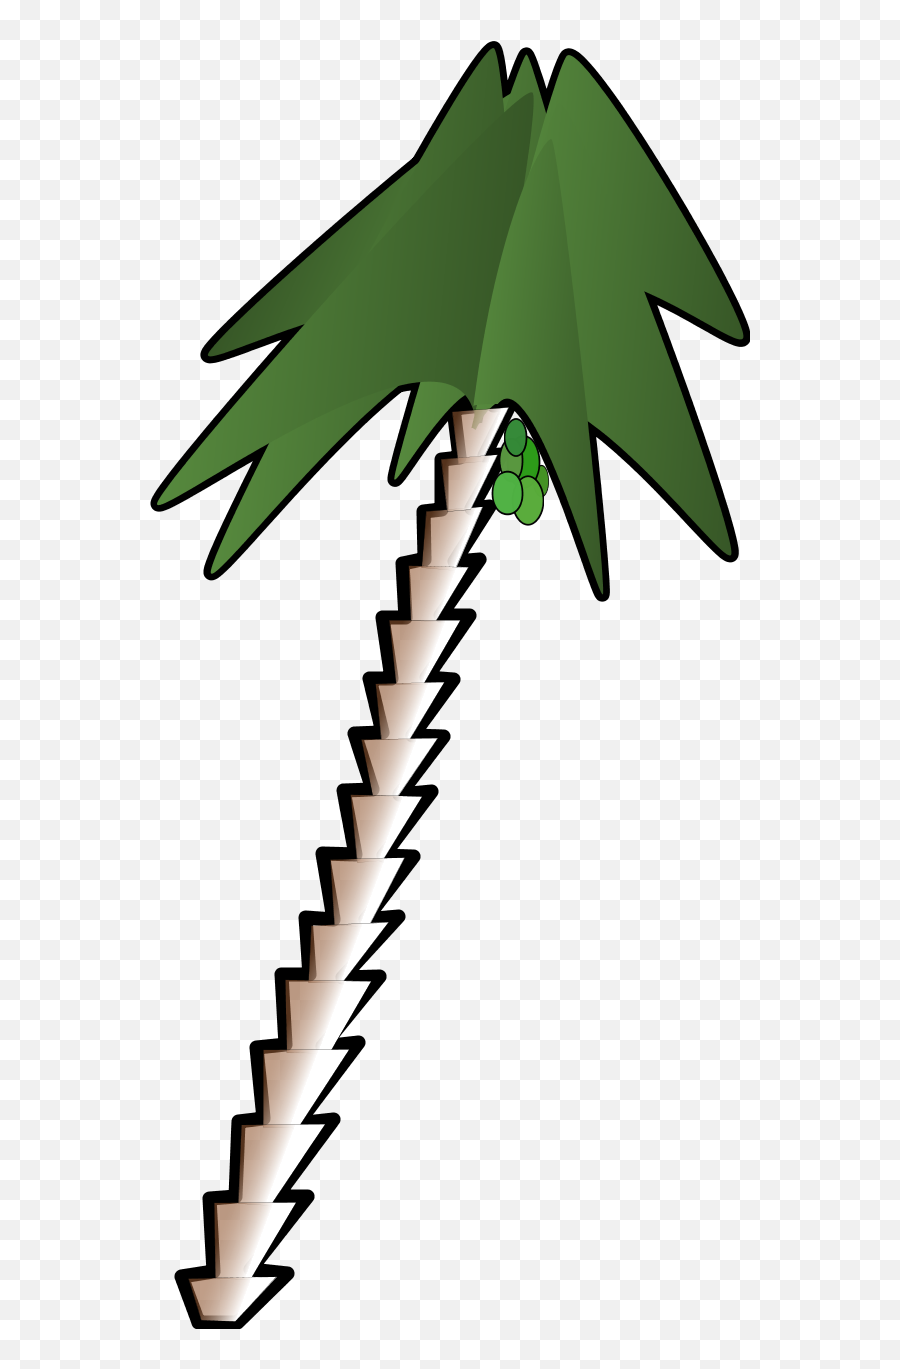 Pine Tree Silhouette Clip Art - Ascii Art Palm Tree Png,Pine Trees Silhouette Png